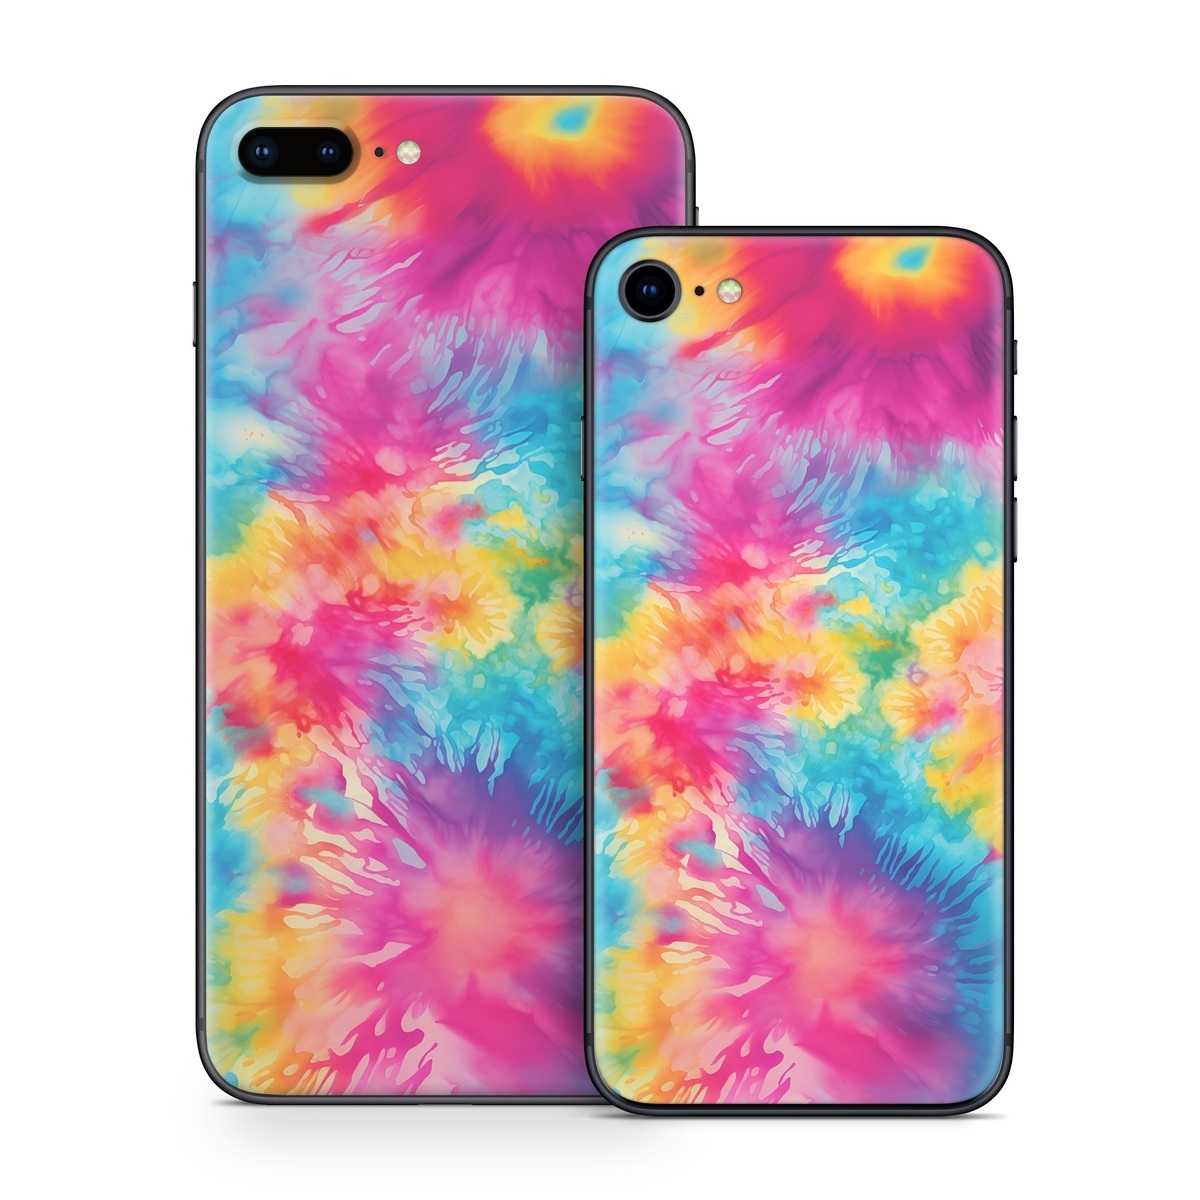 iPhone 8 Series Skin design of Colorfulness, Plant, Flower, Orange, Paint, Petal, Pink, Art, Painting, Magenta, with black, gray, orange colors